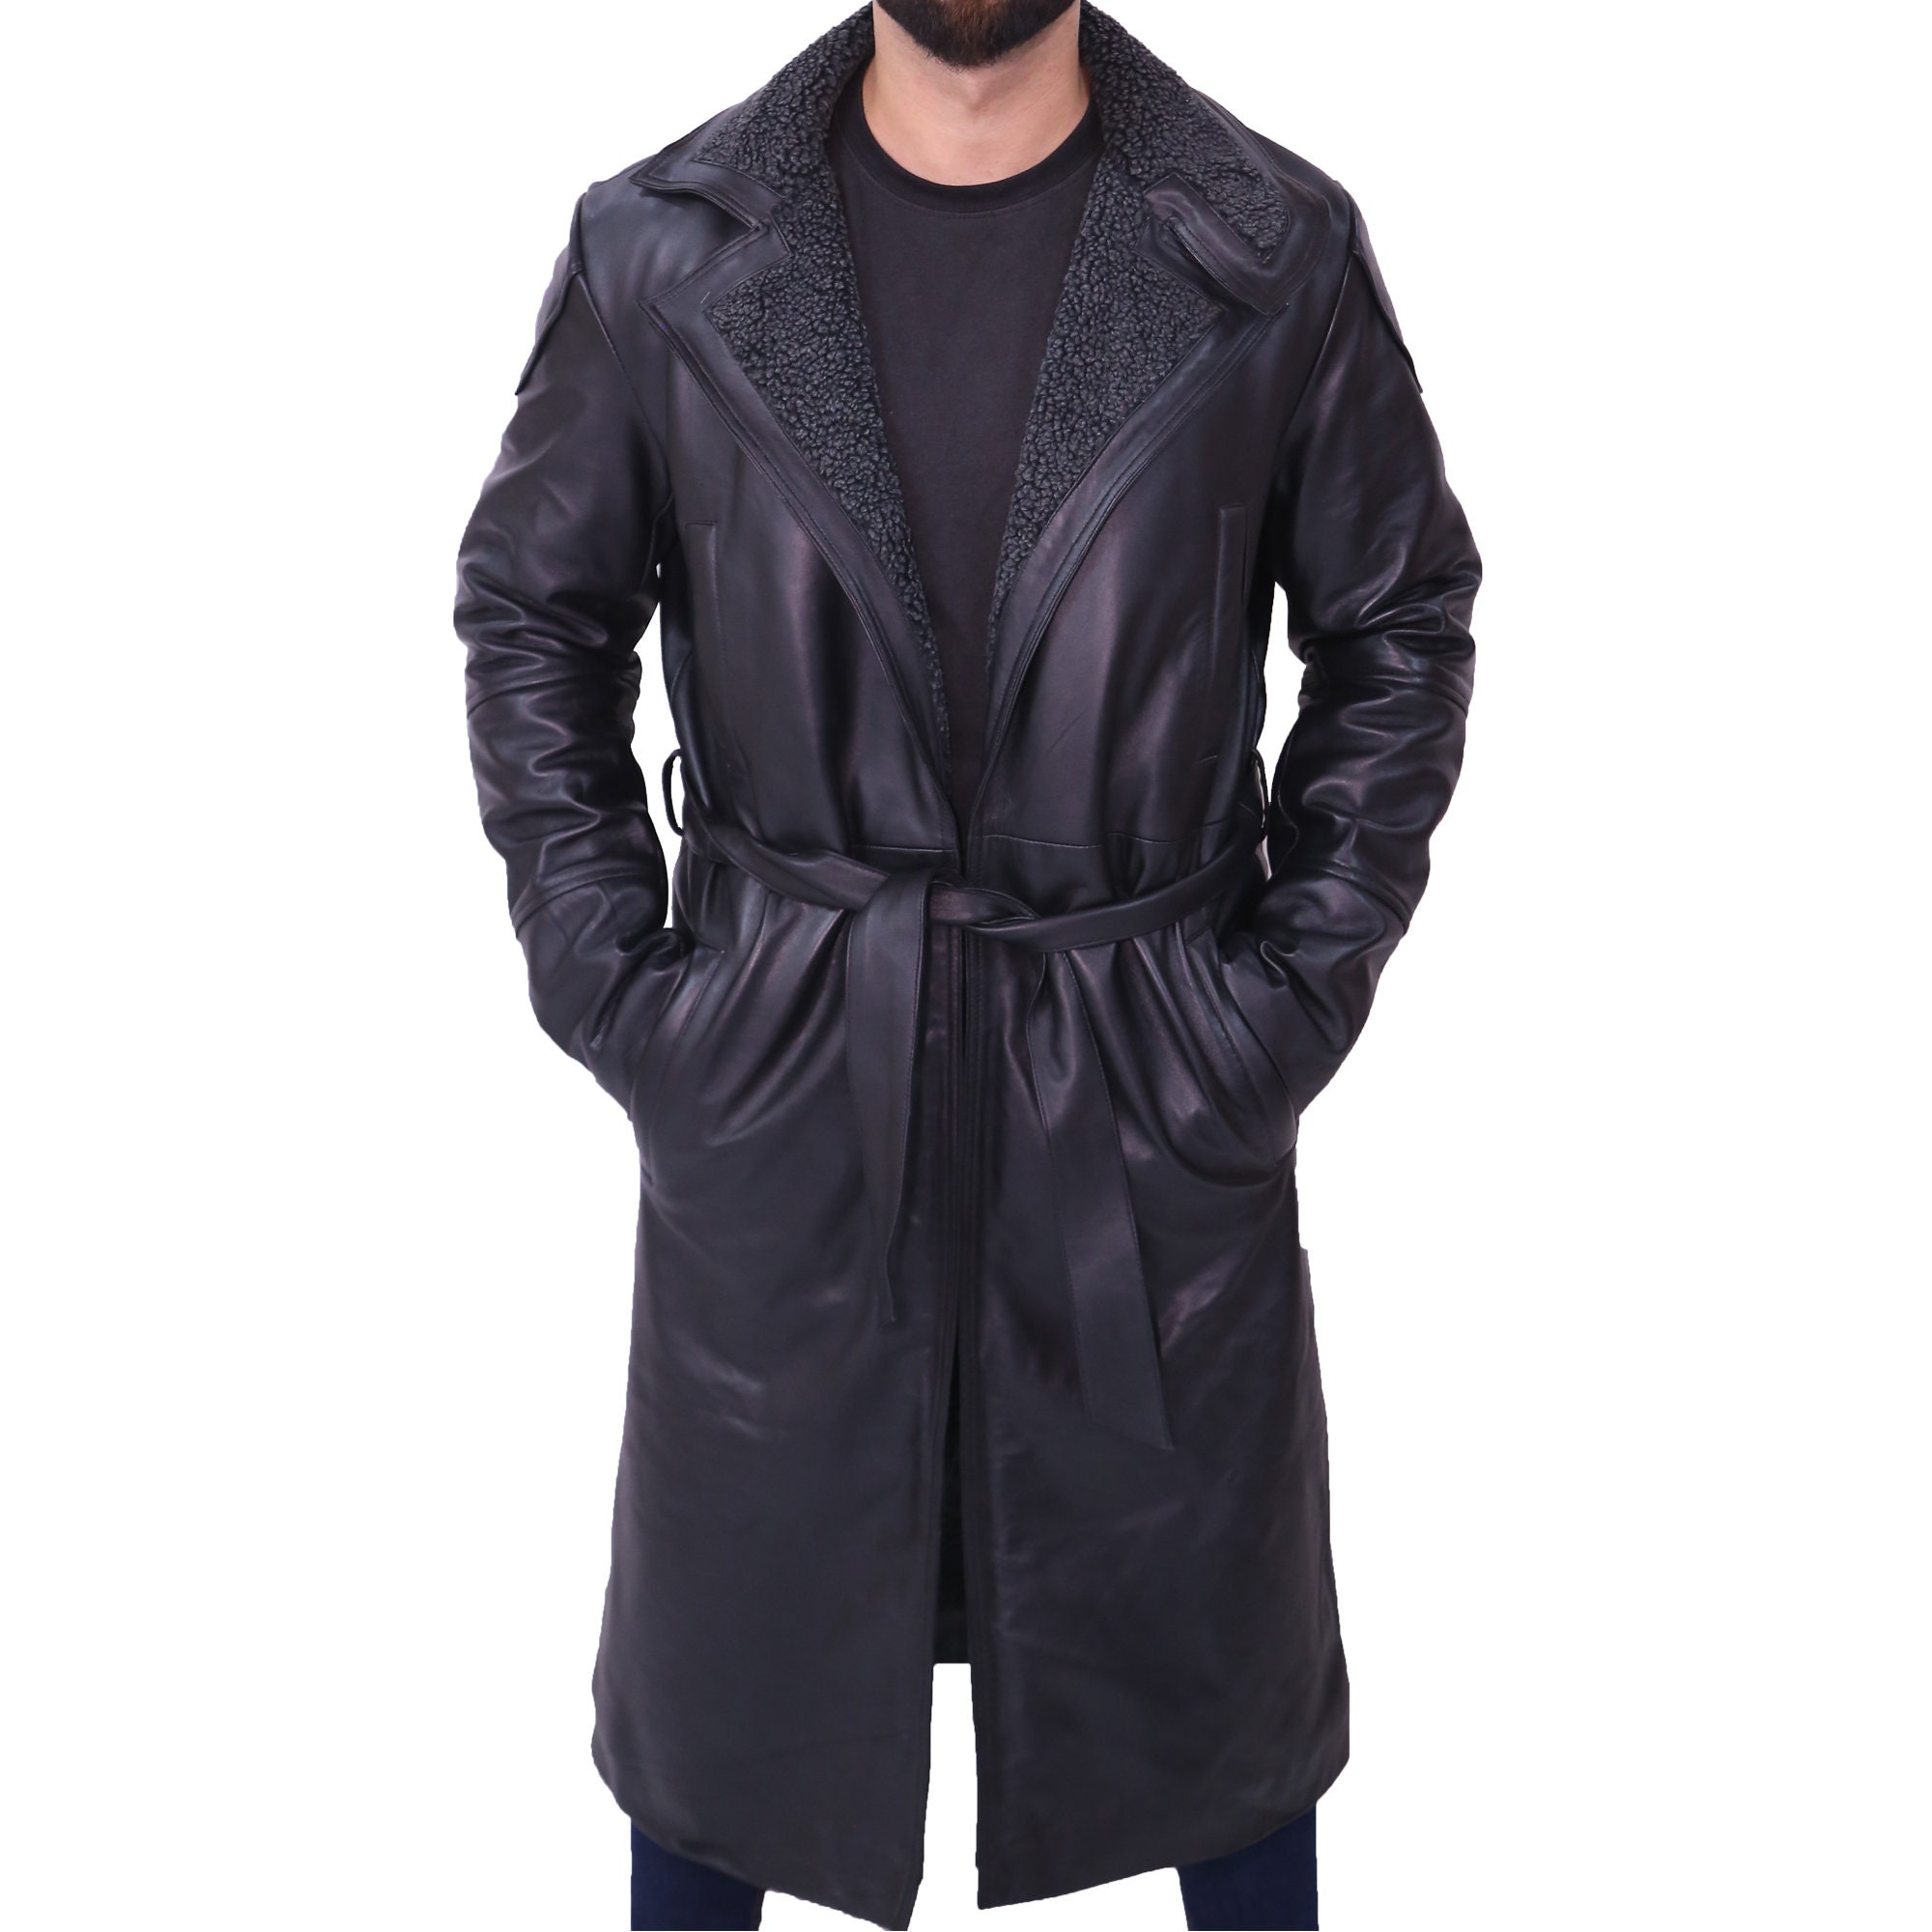 Ryan Gosling's Blade Runner 2049 Trench Coat – Lusso Leather